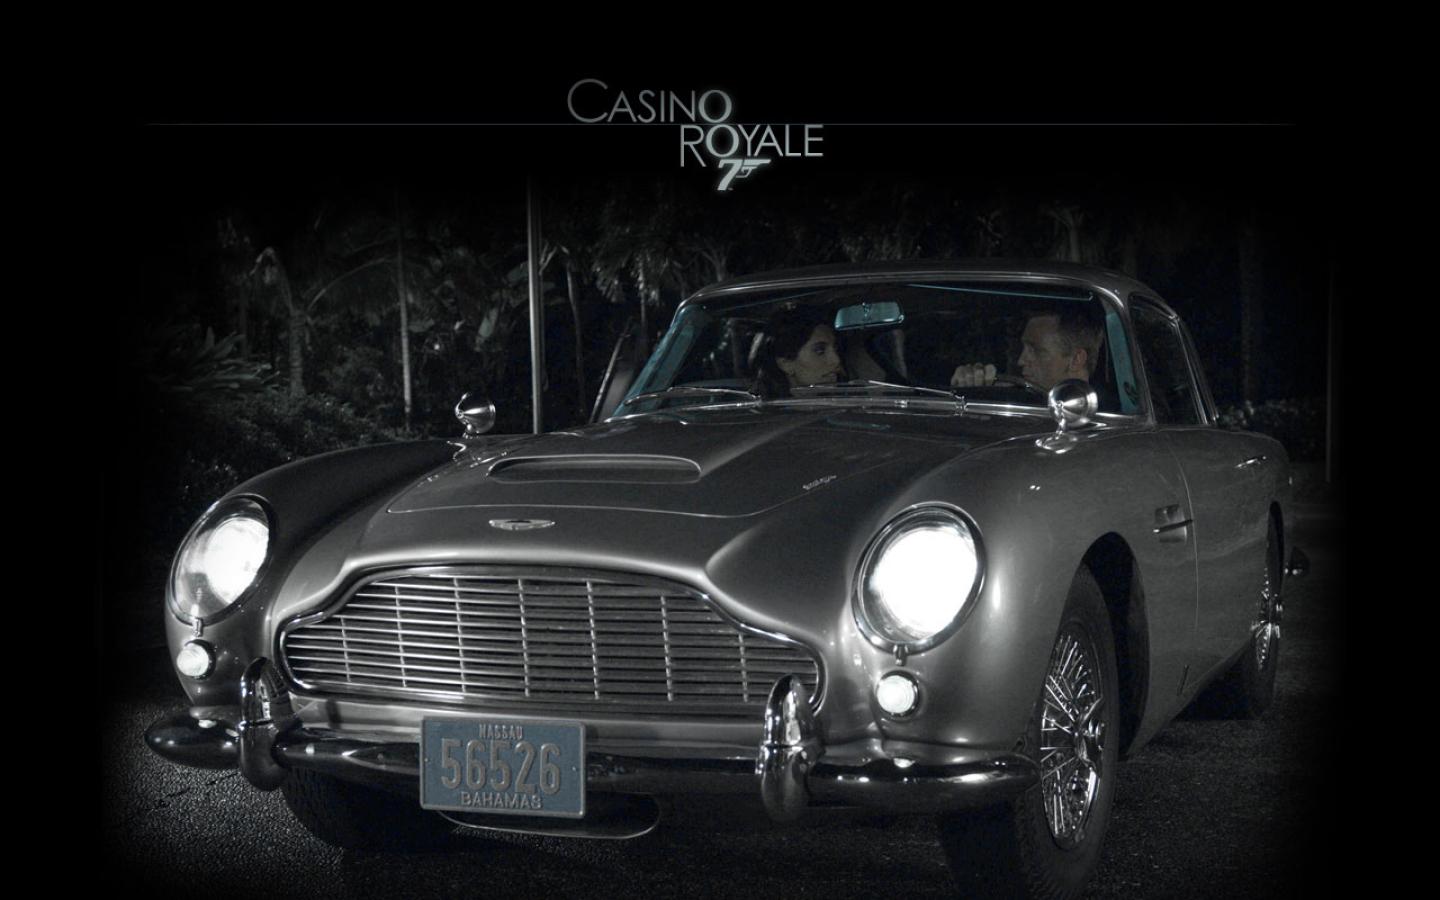 Casino Royale Wallpaper #4 1440 x 900 